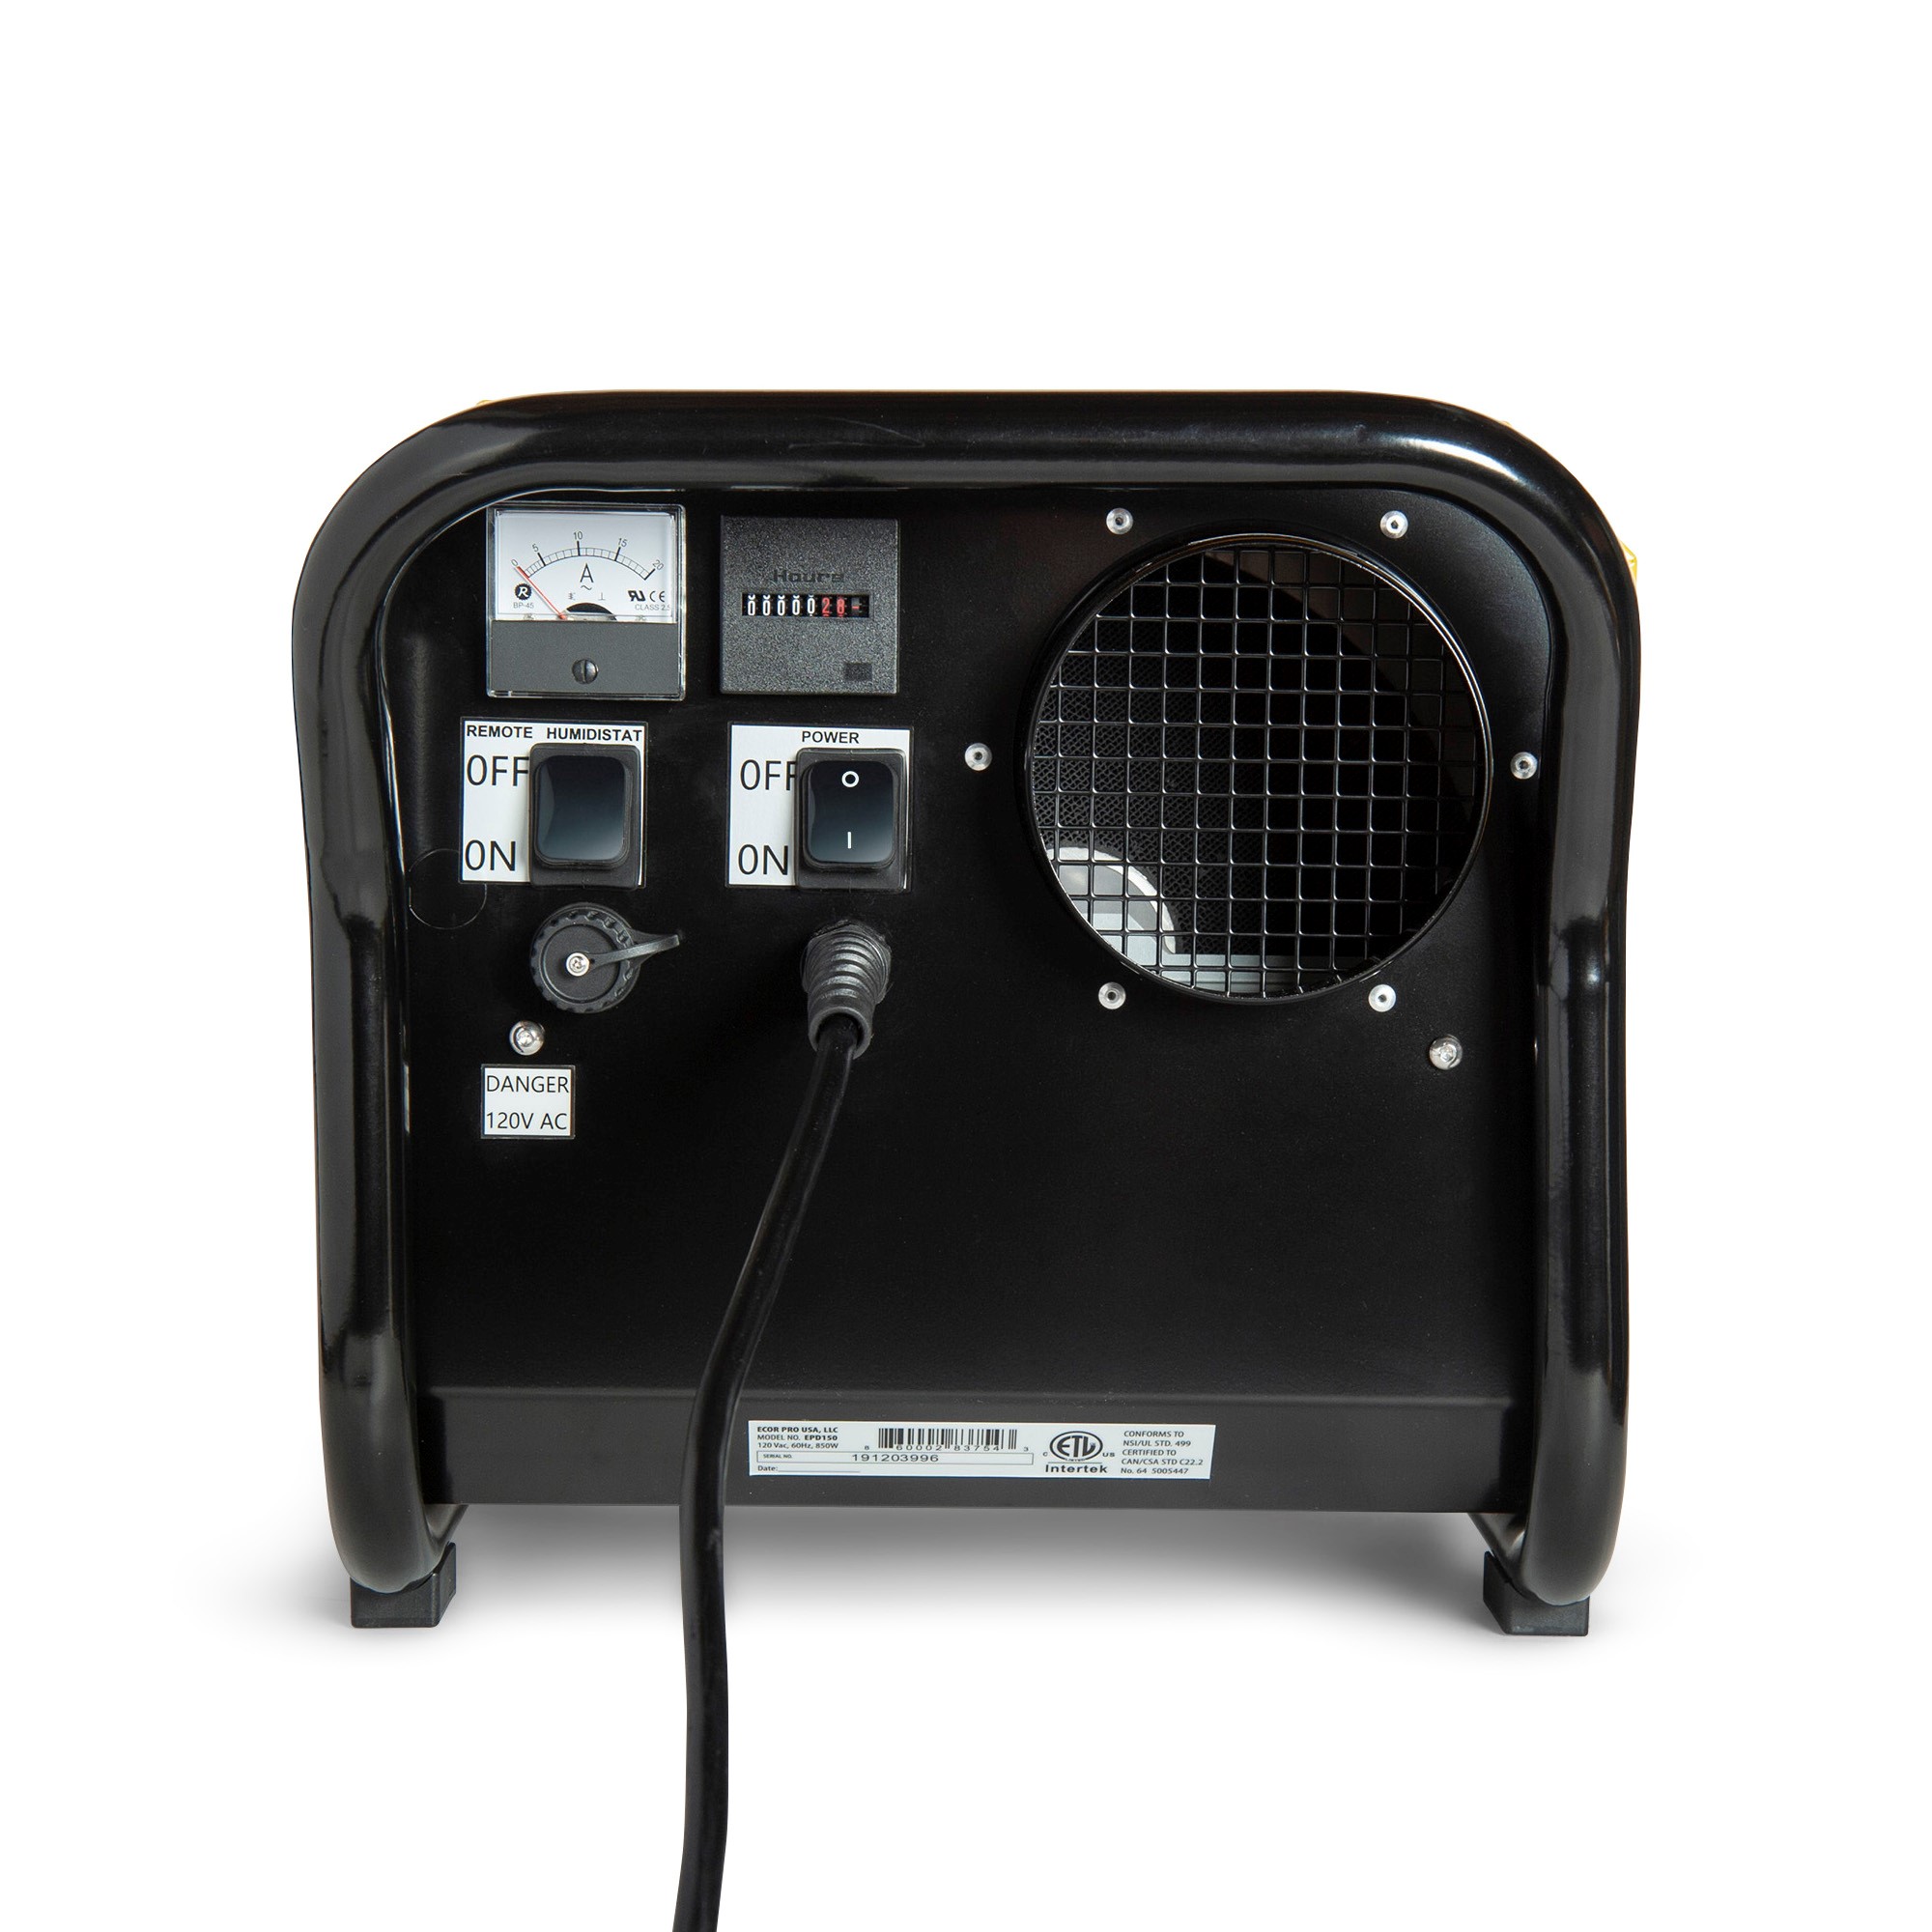 EPD30 Deshumidificador de ventilador seco para 247 usos. No produce agua